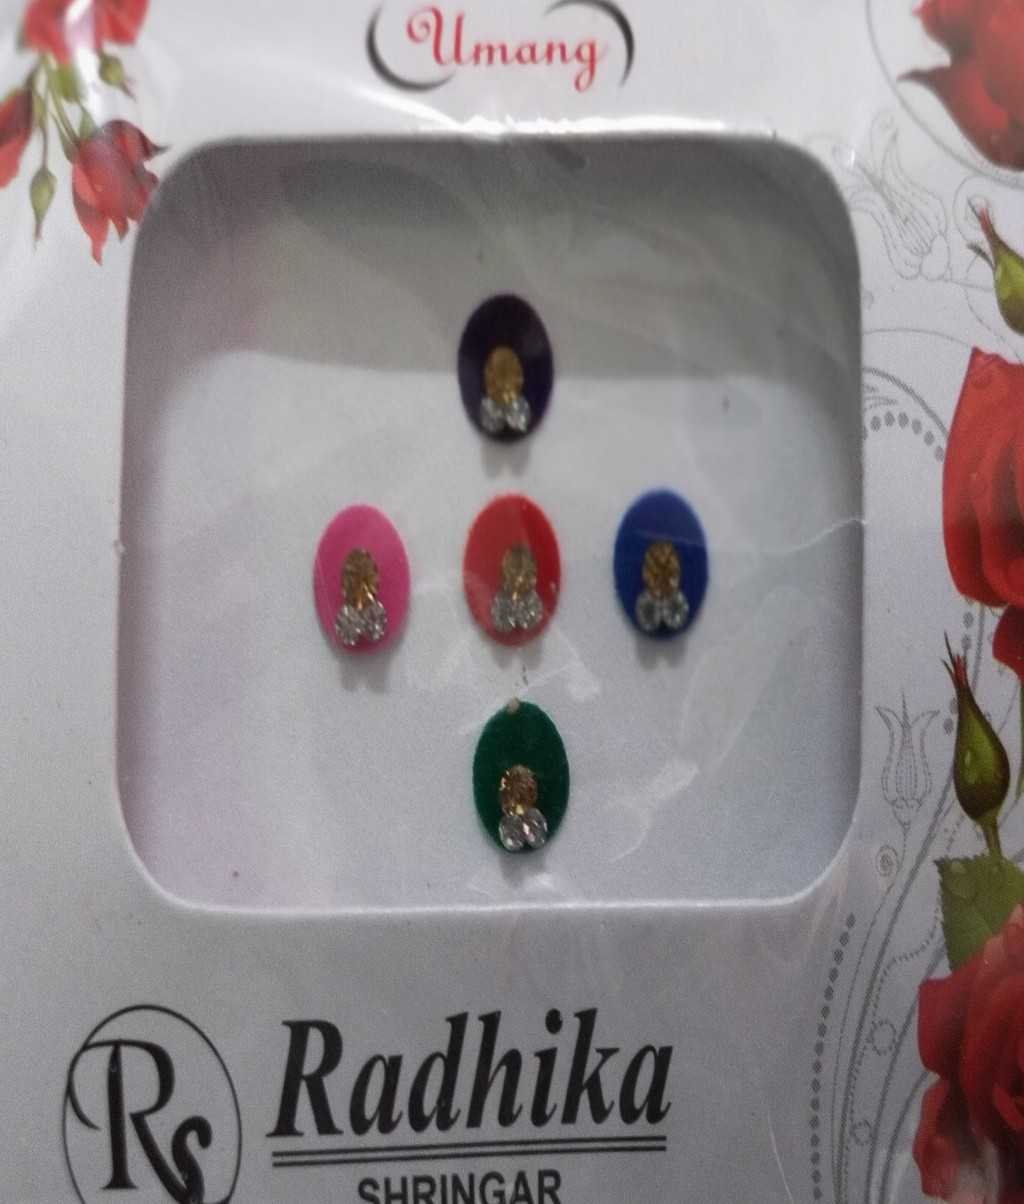 Radhika Trading Company